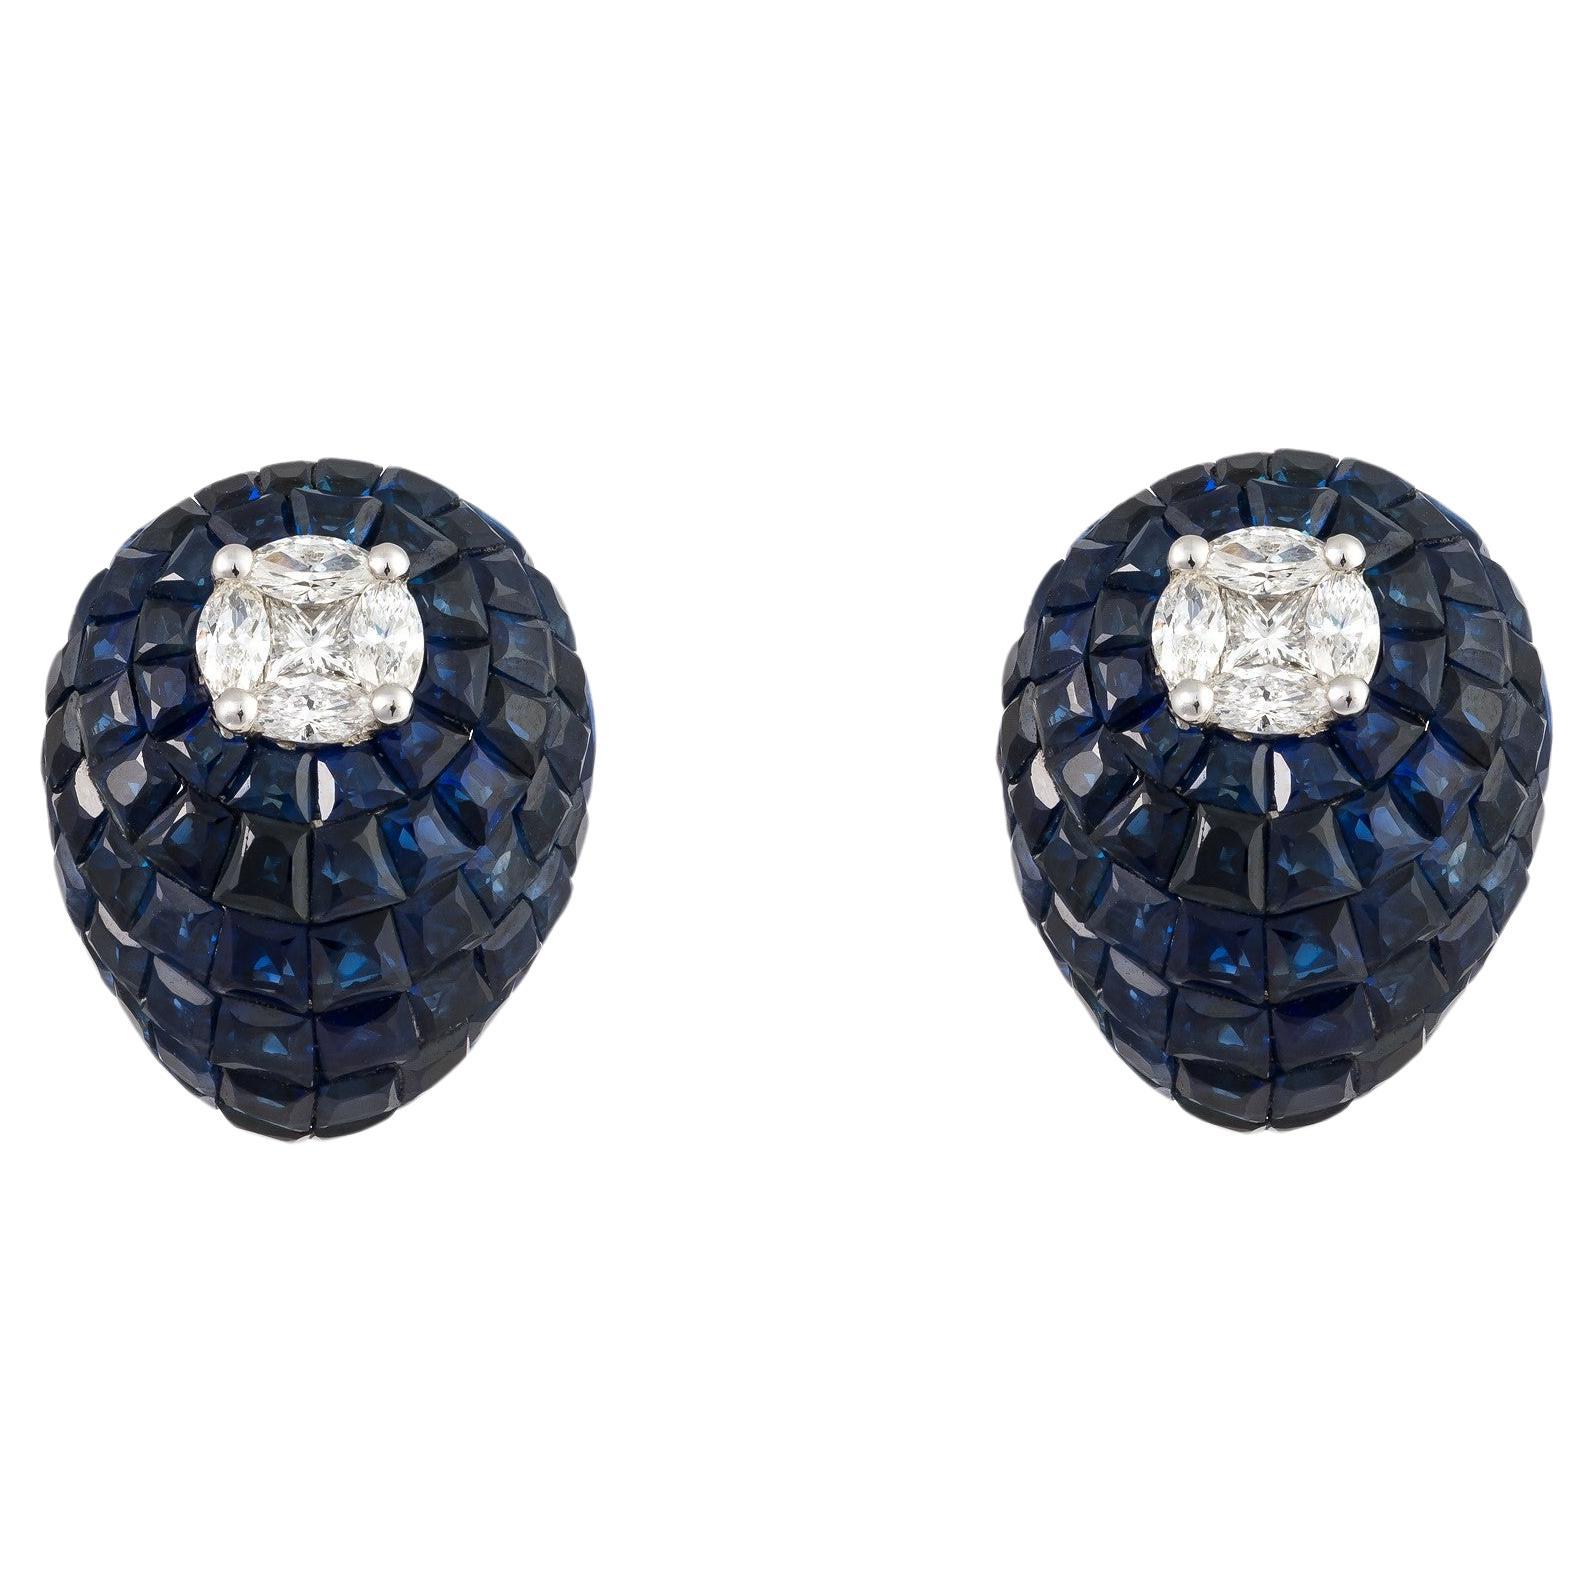 NWT $20, 800 18KT Gold Rare Gorgeous Blue Sapphire Diamond Bombe Earrings